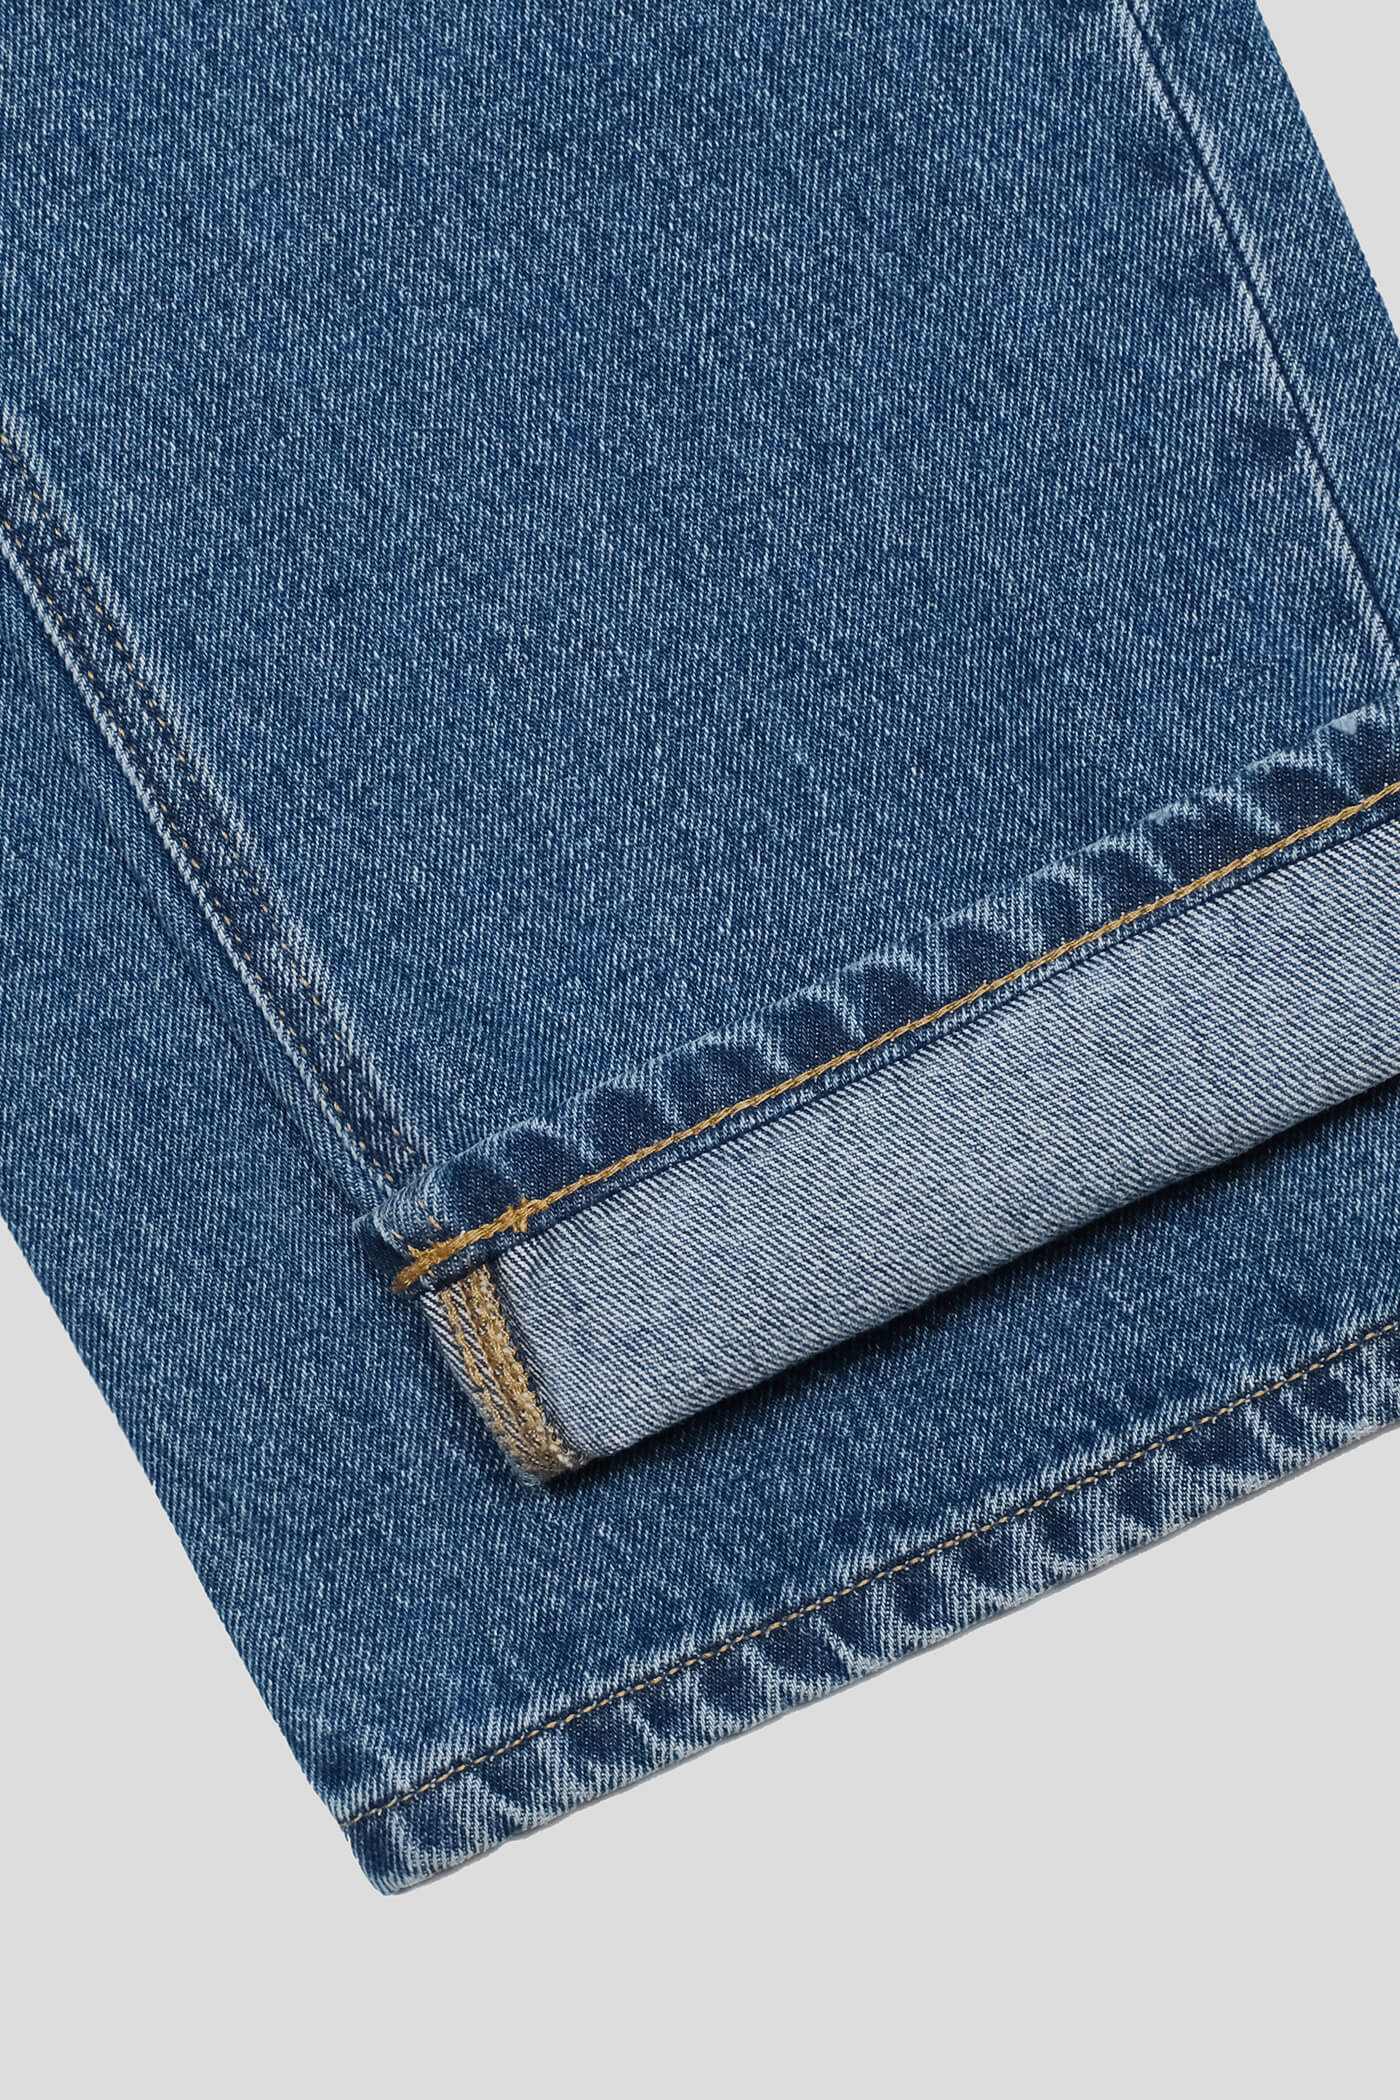 Jeans Copper Denim Straight xanh-nhat 8